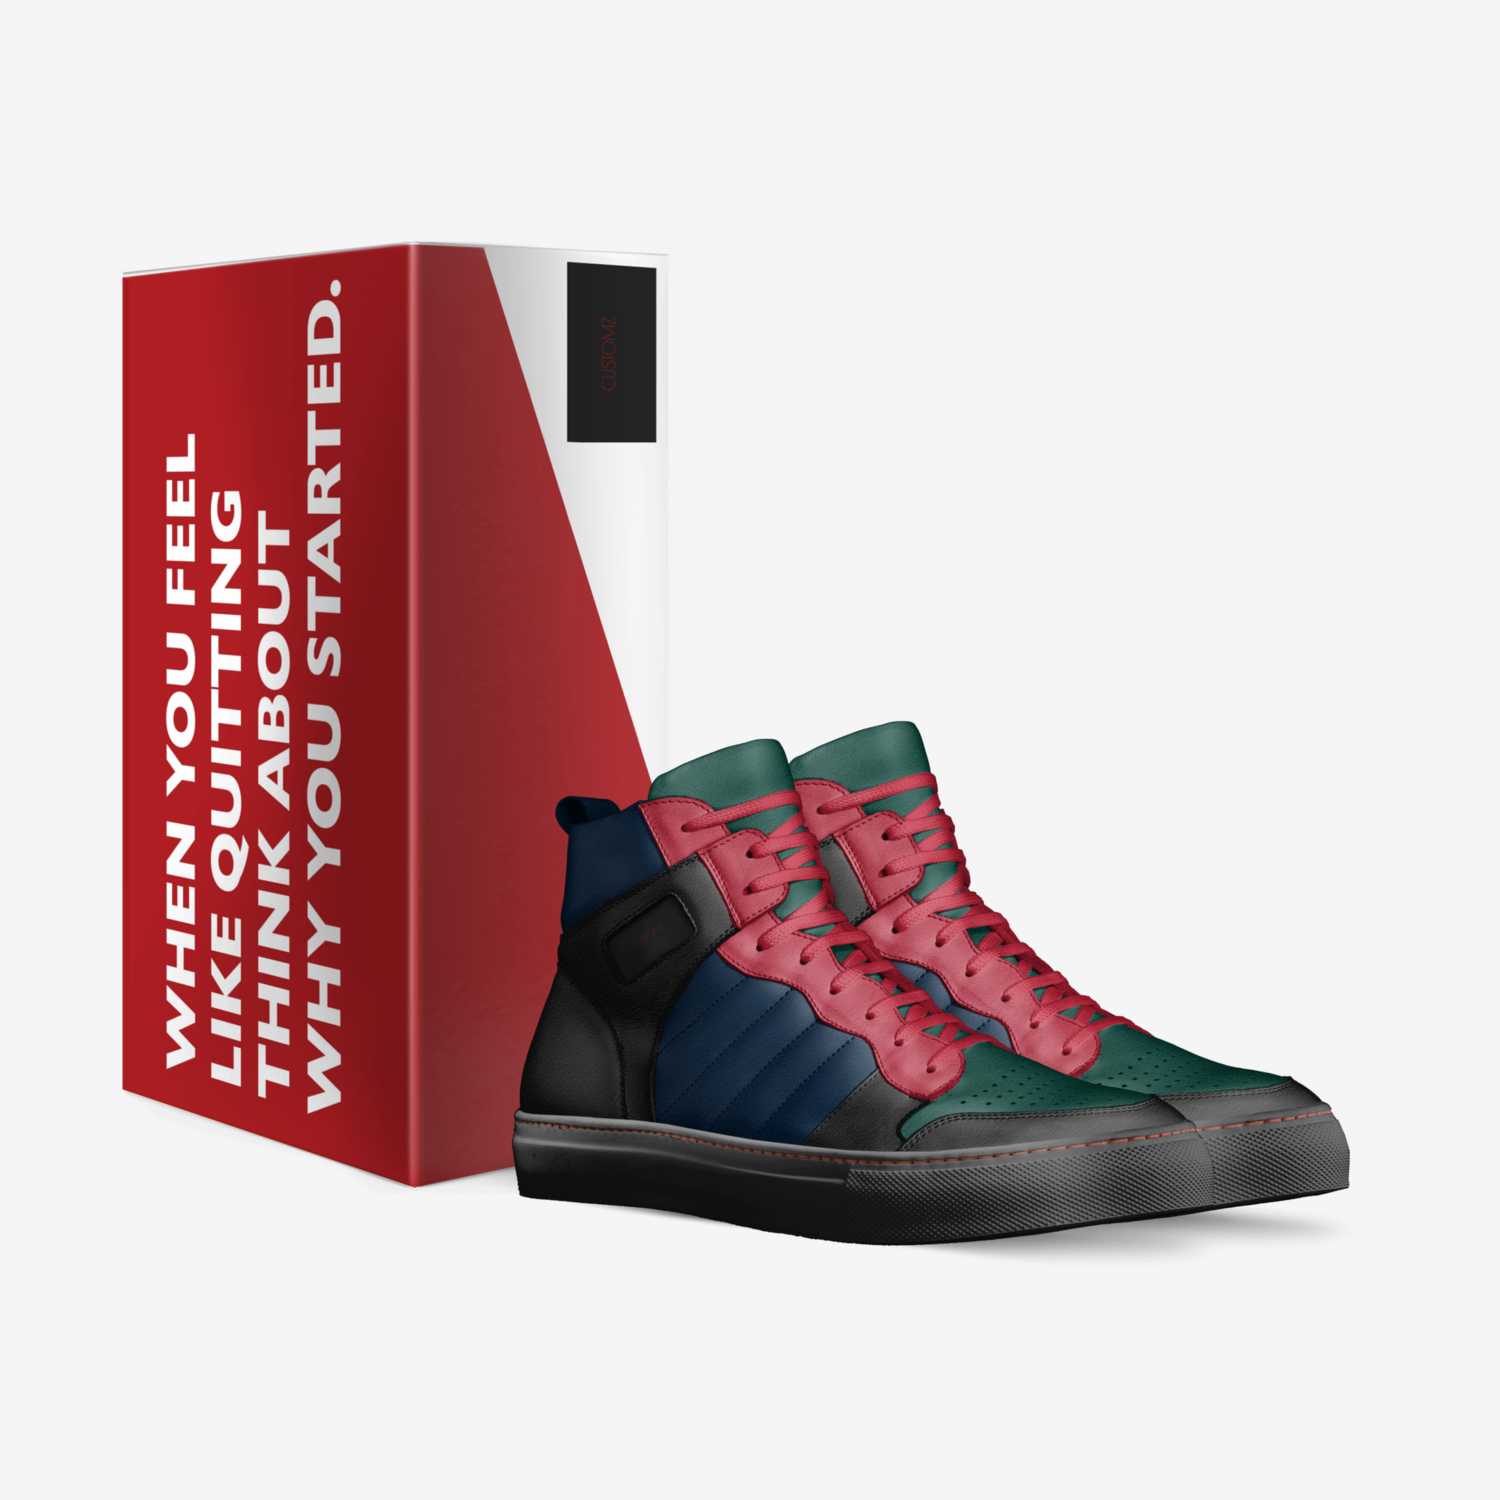 CUSTOMZ custom made in Italy shoes by Benjamin Reid | Box view